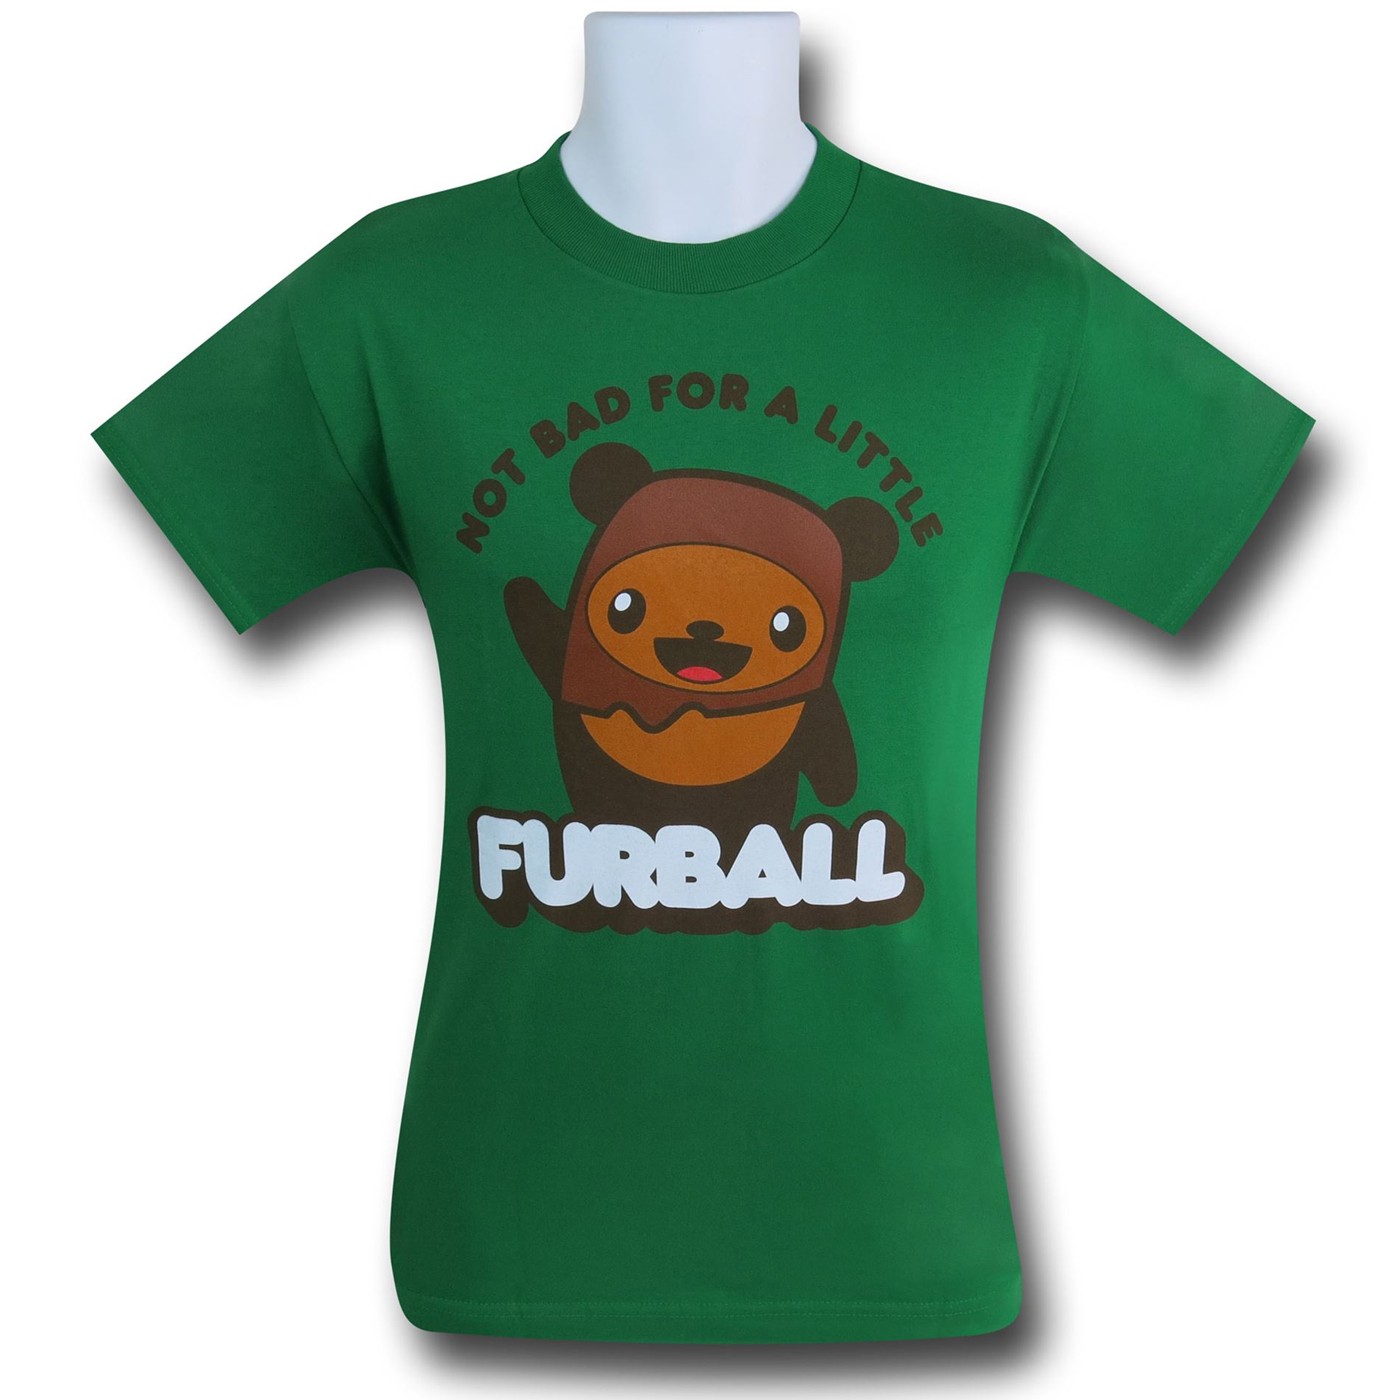 Star Wars Ewok Furball T-Shirt